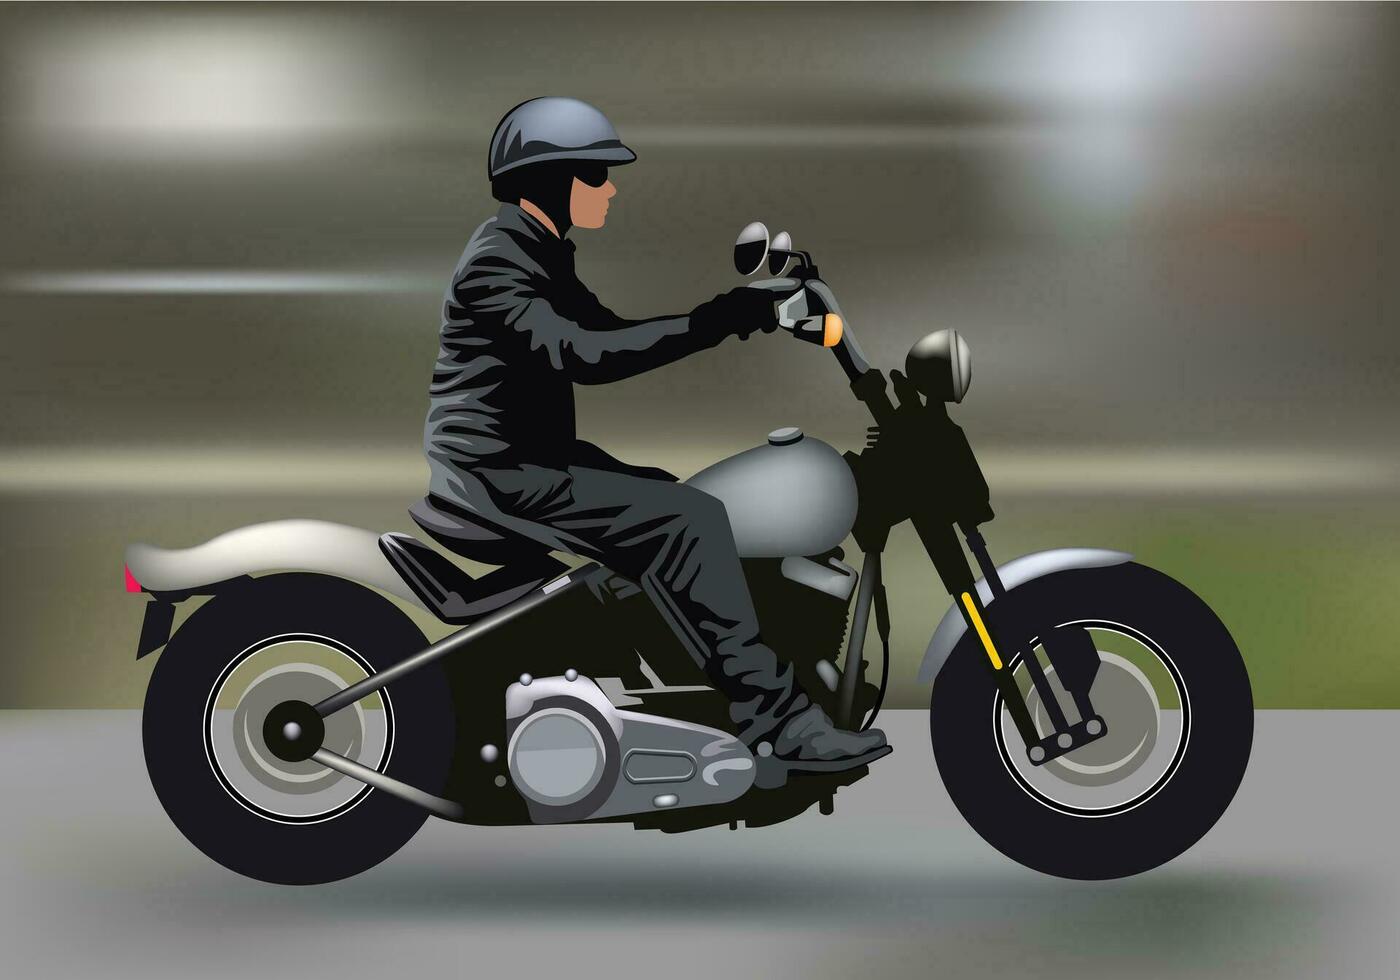 A man riding motorbike vector illustration for background design.